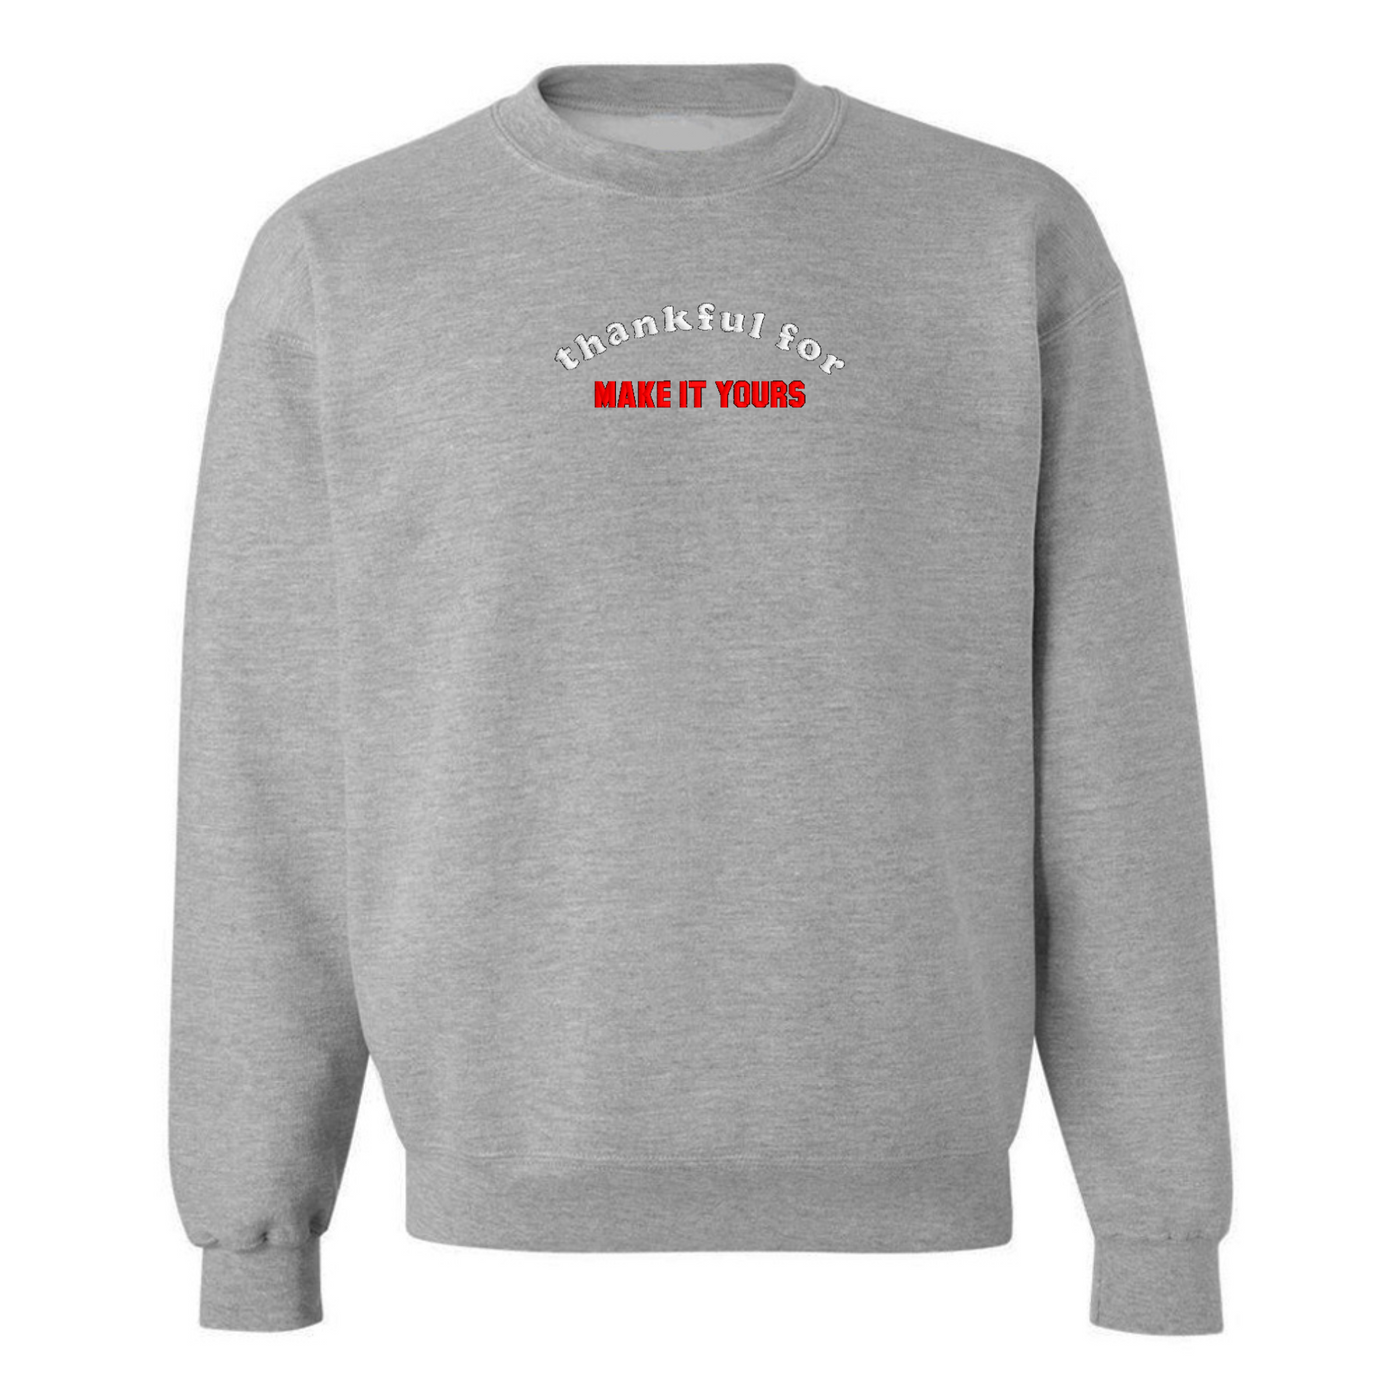 Make It Yours™ 'Thankful For' Crewneck Sweatshirt